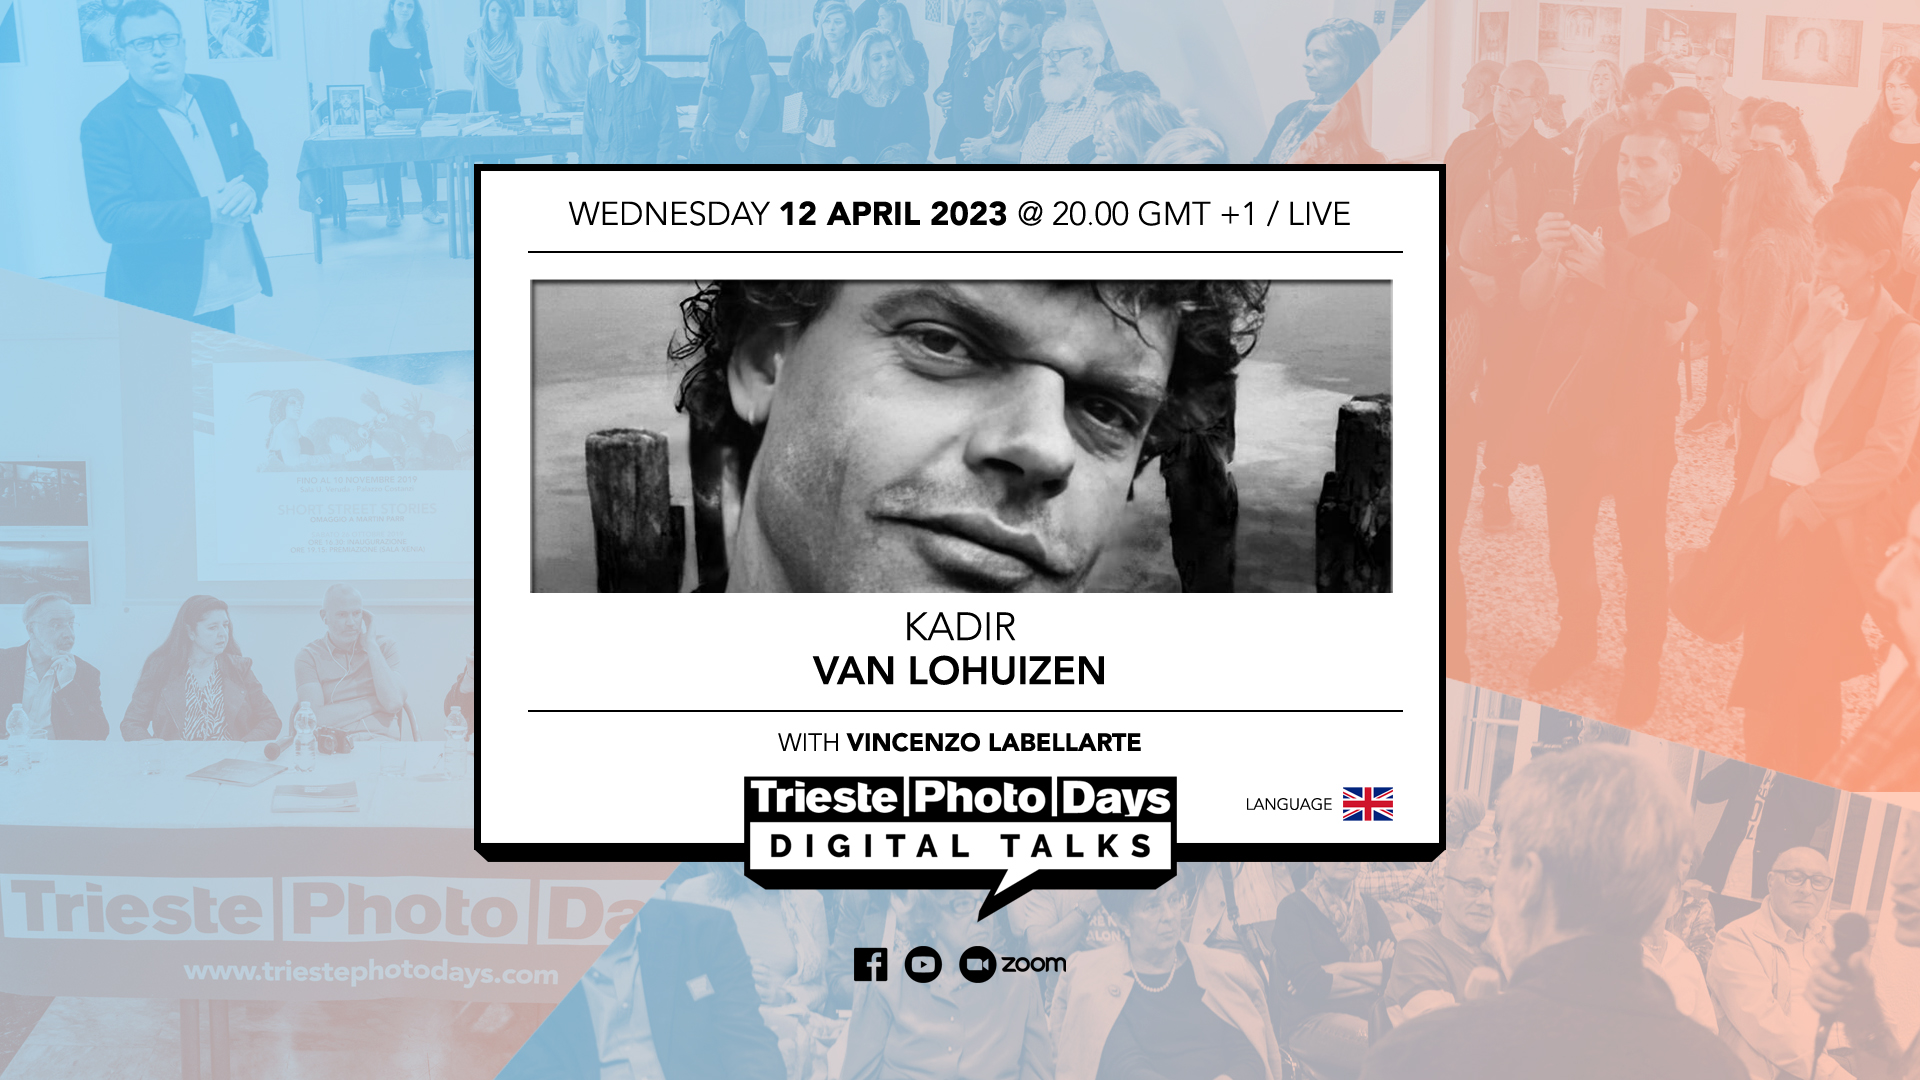 Conferenza virtuale con fotografo Kadir Van Lohuizen